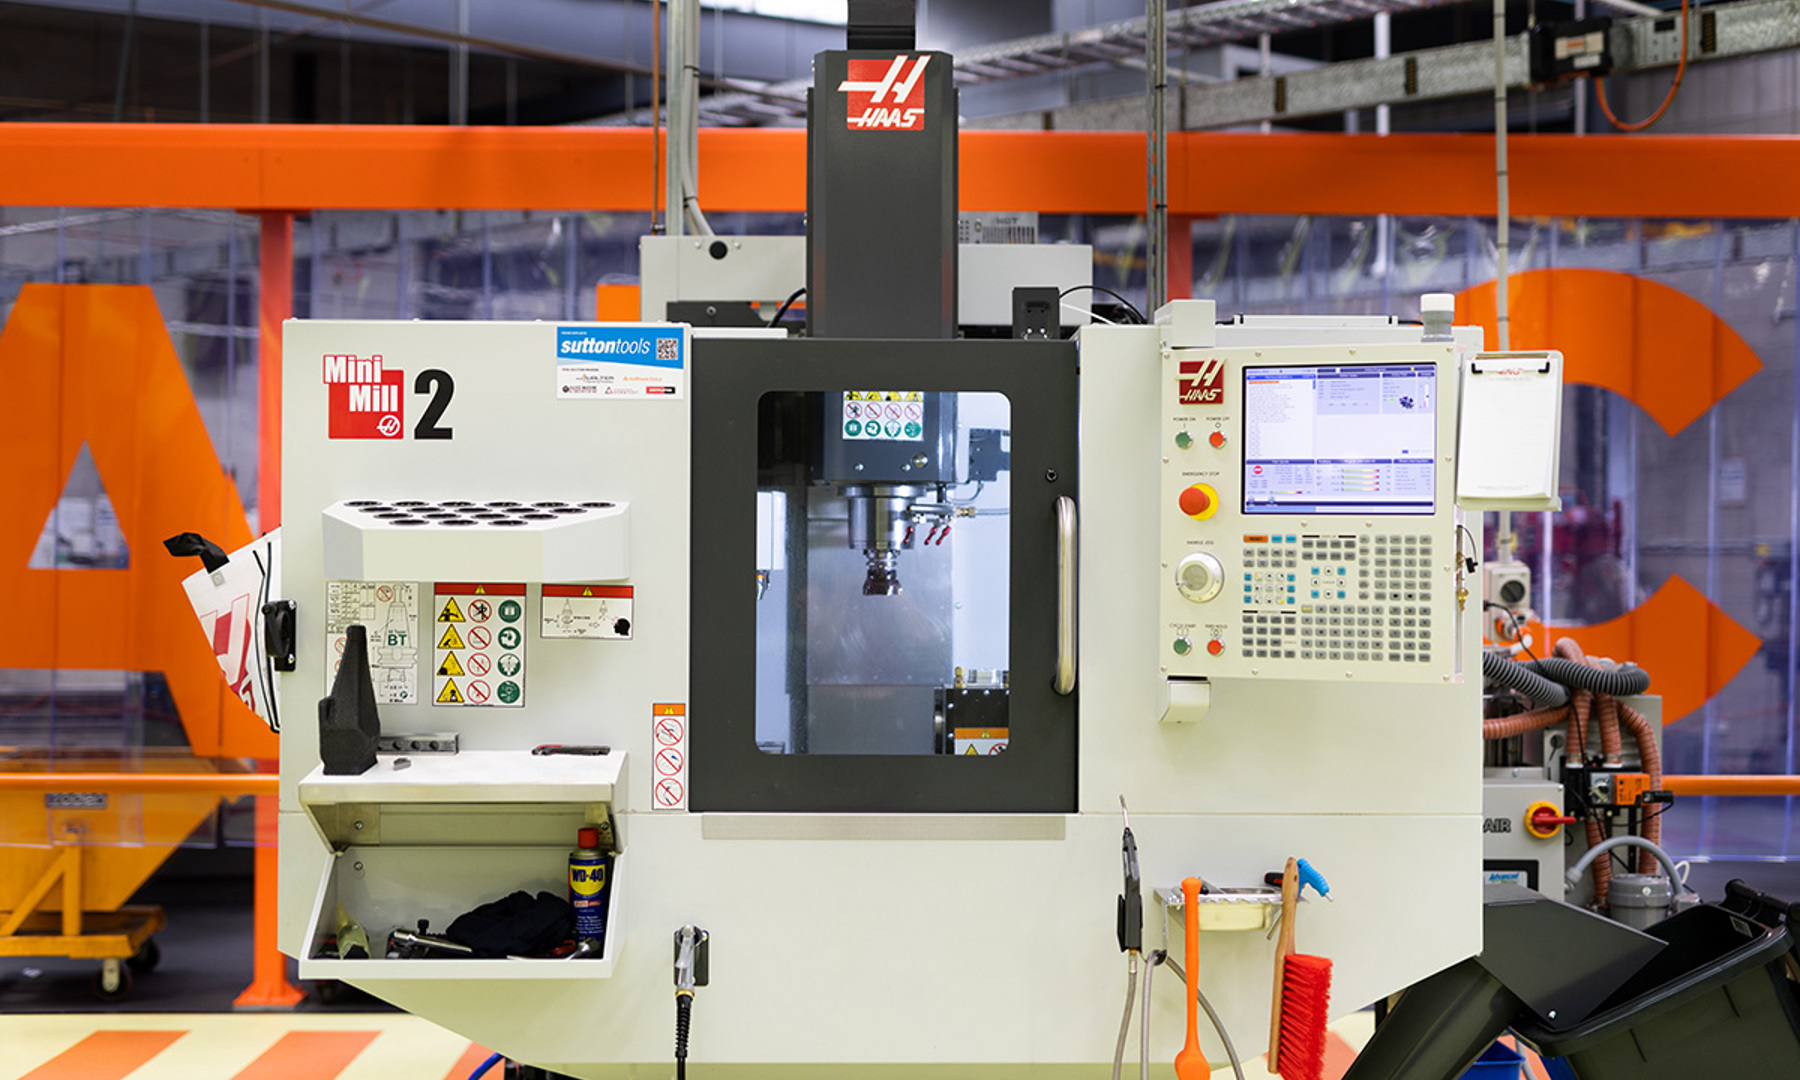 Haas Mini Mill - high-performance CNC milling machine